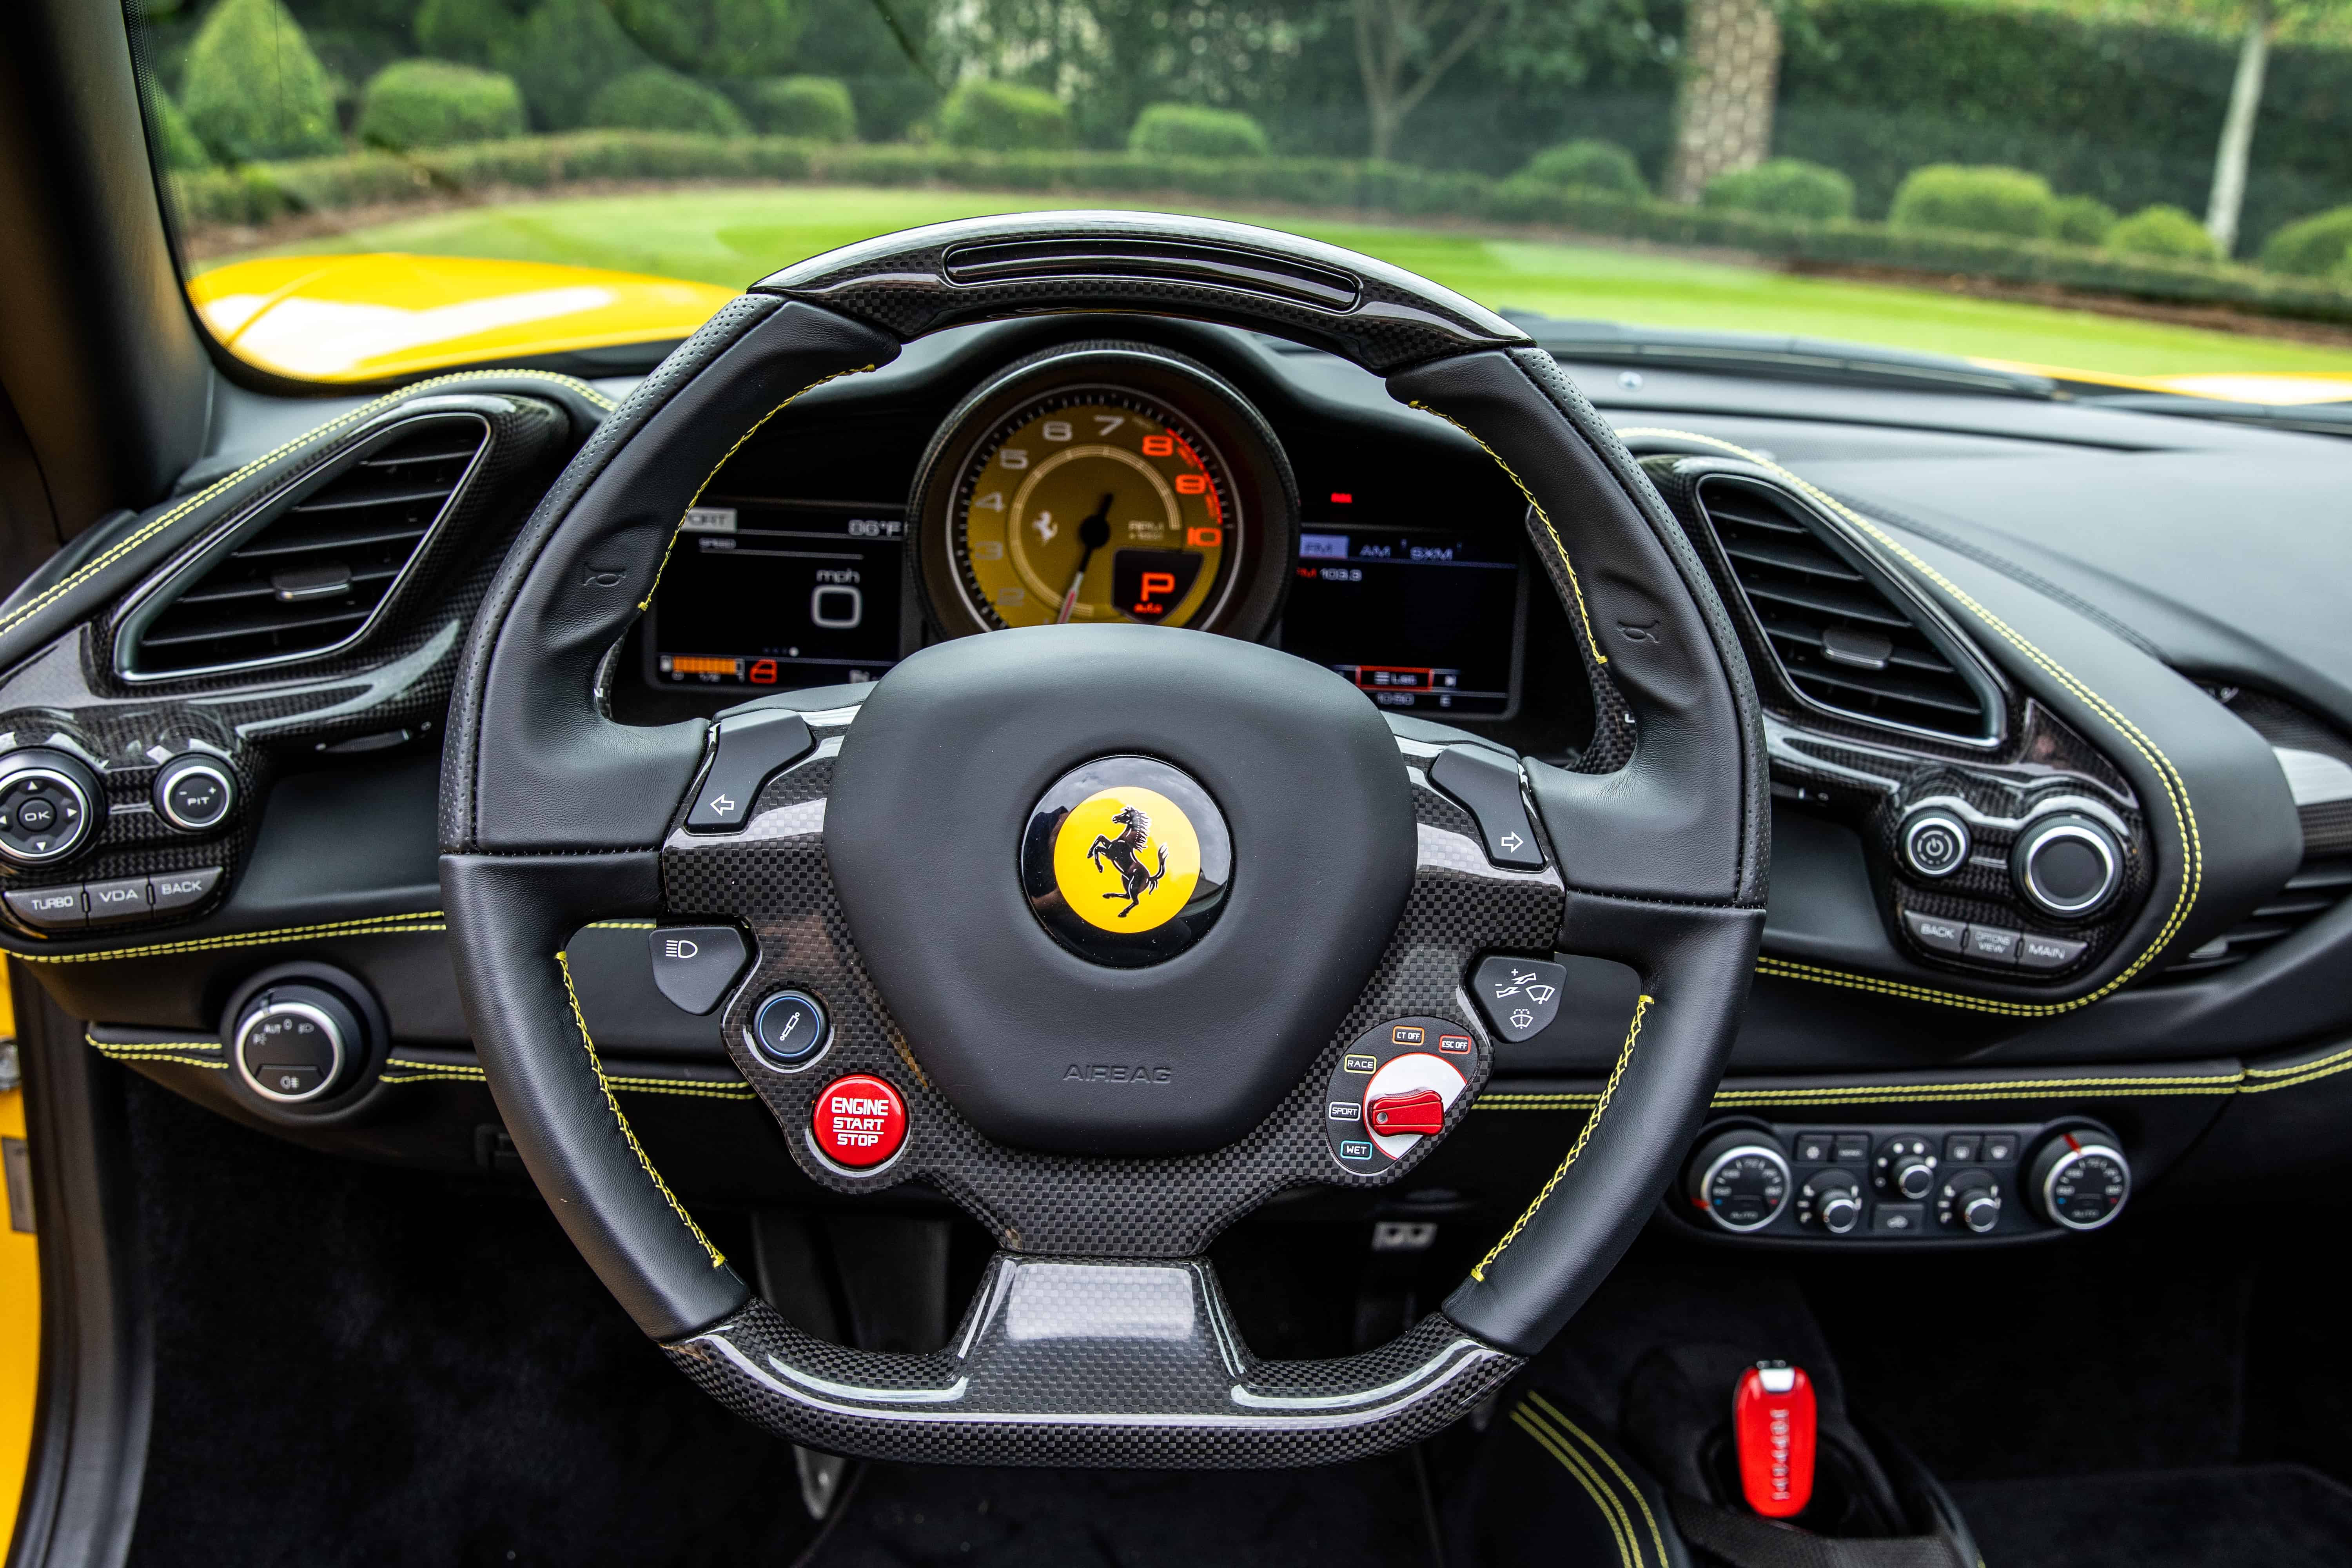 Ferrari - The Stuff of Dreams